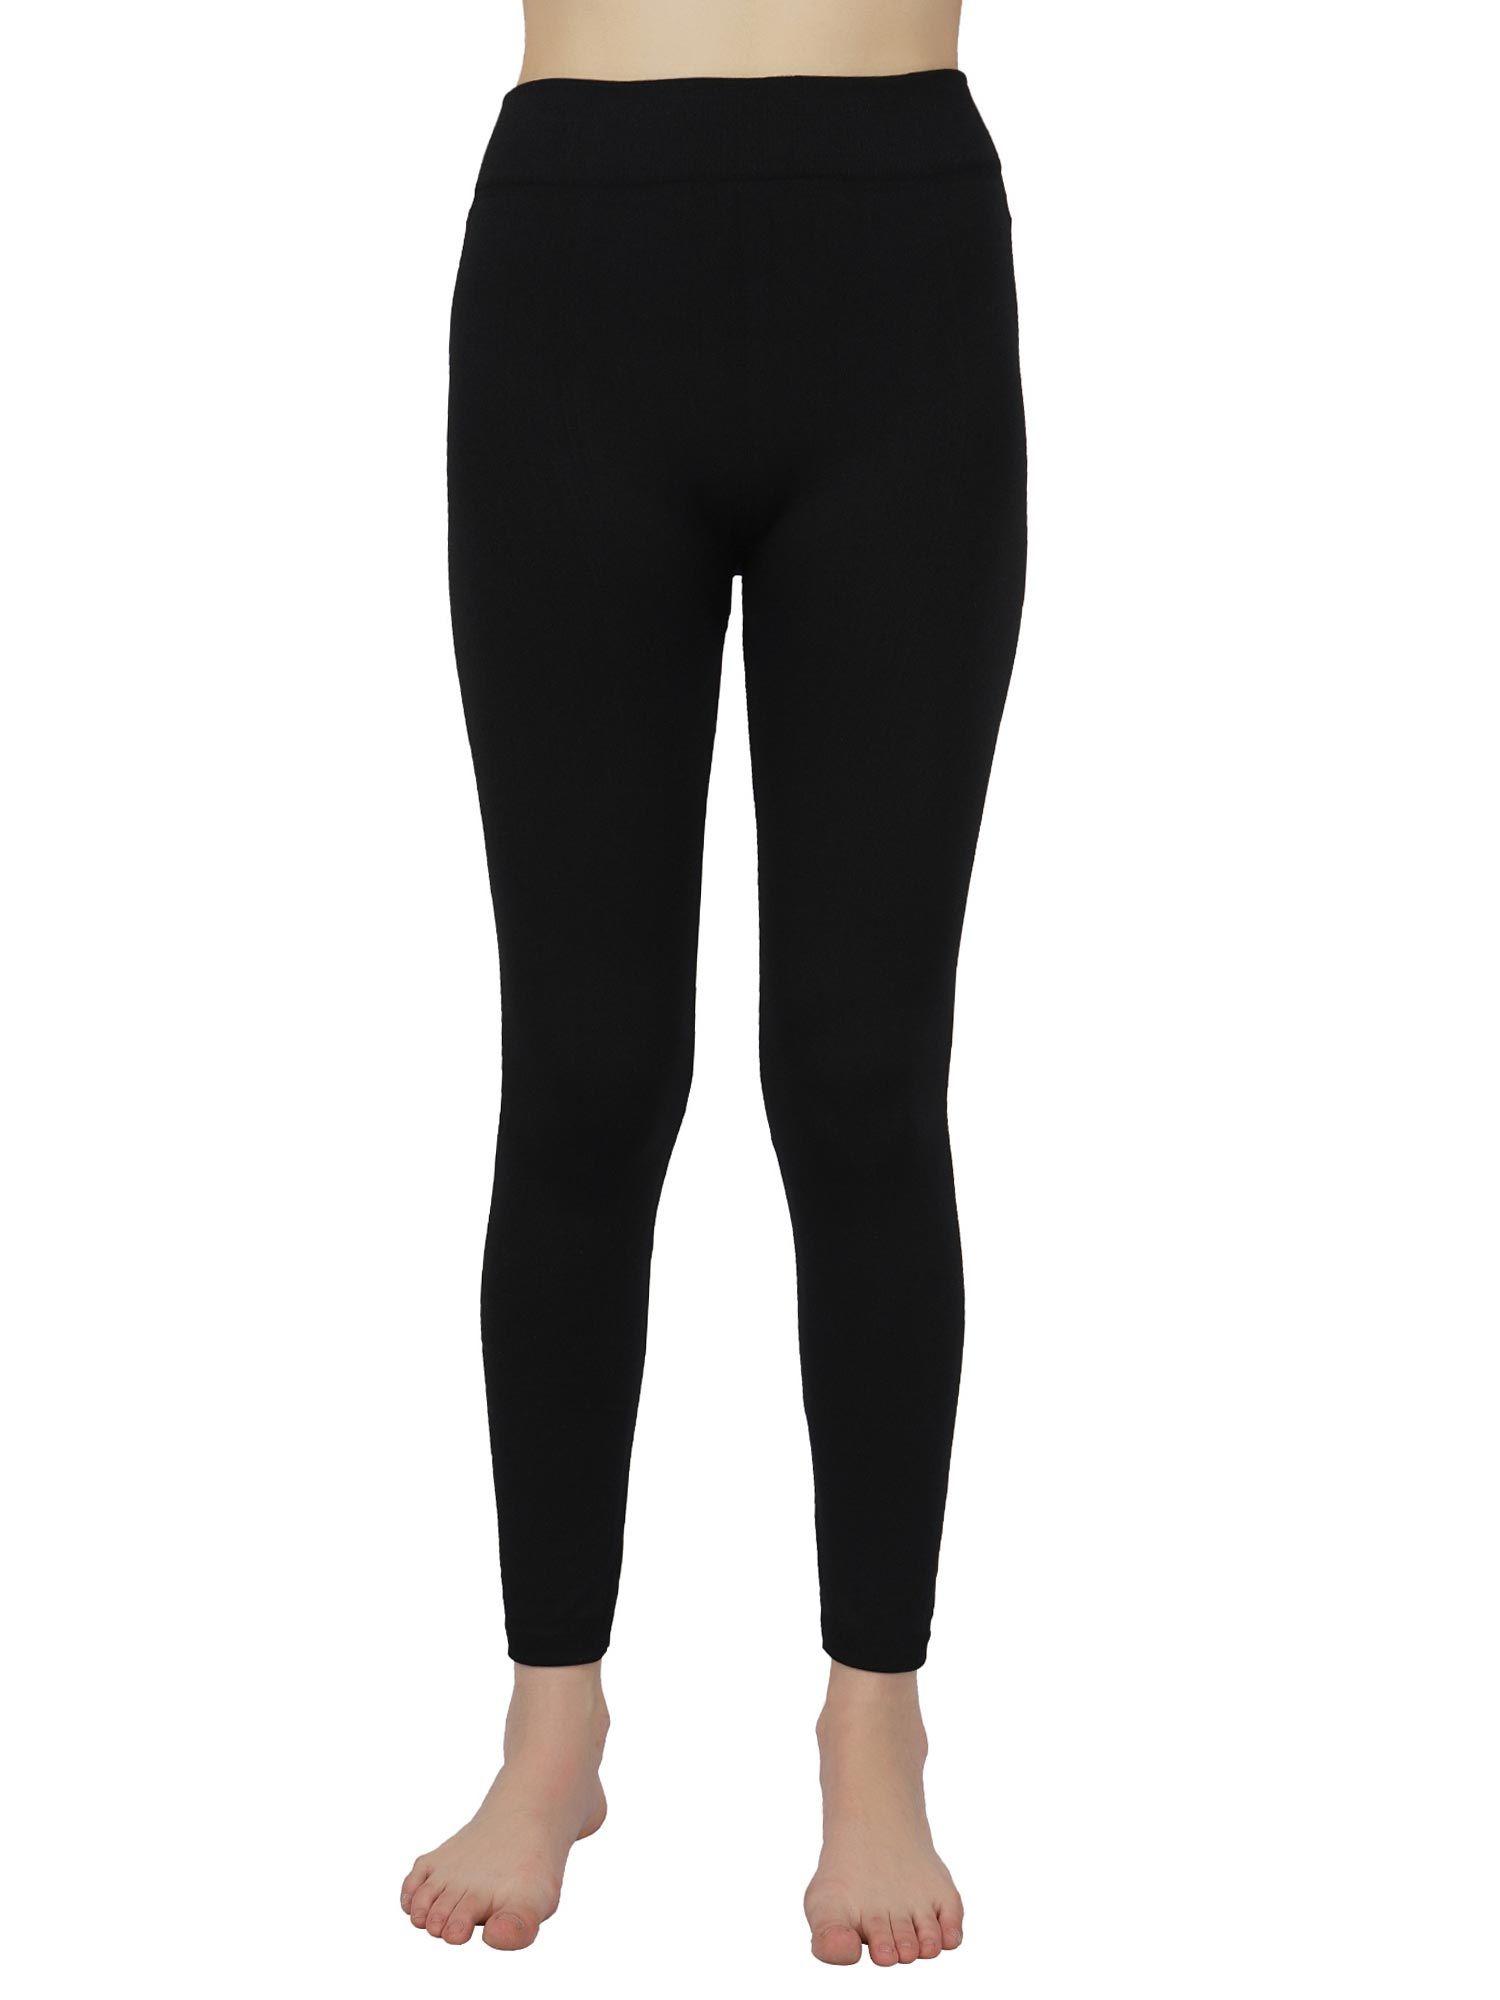 women's regular fit fleece warm inner wear thermal tights leggings -black